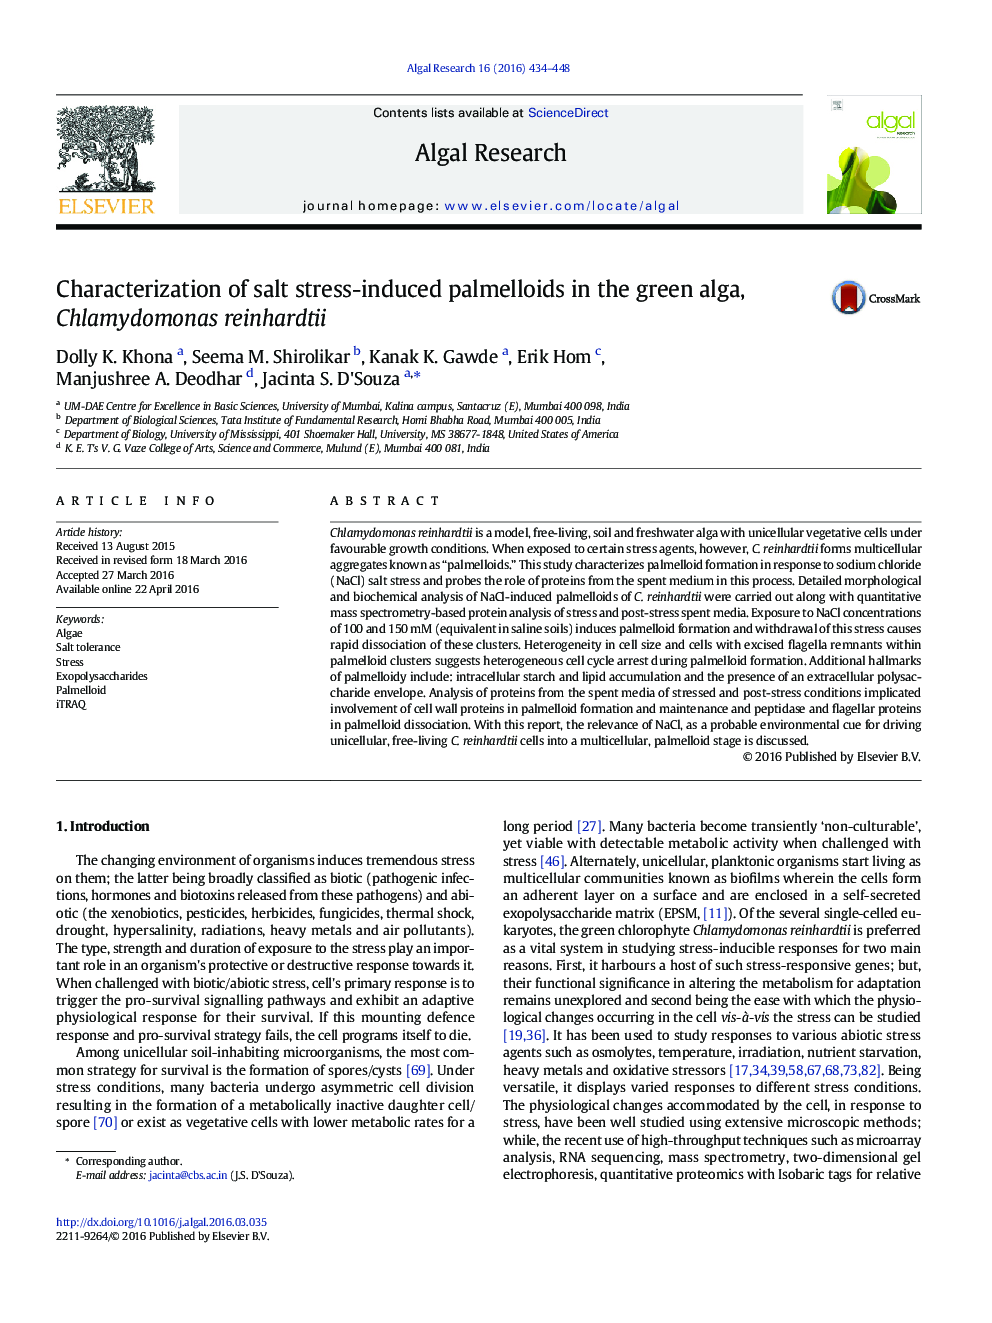 Characterization of salt stress-induced palmelloids in the green alga, Chlamydomonas reinhardtii